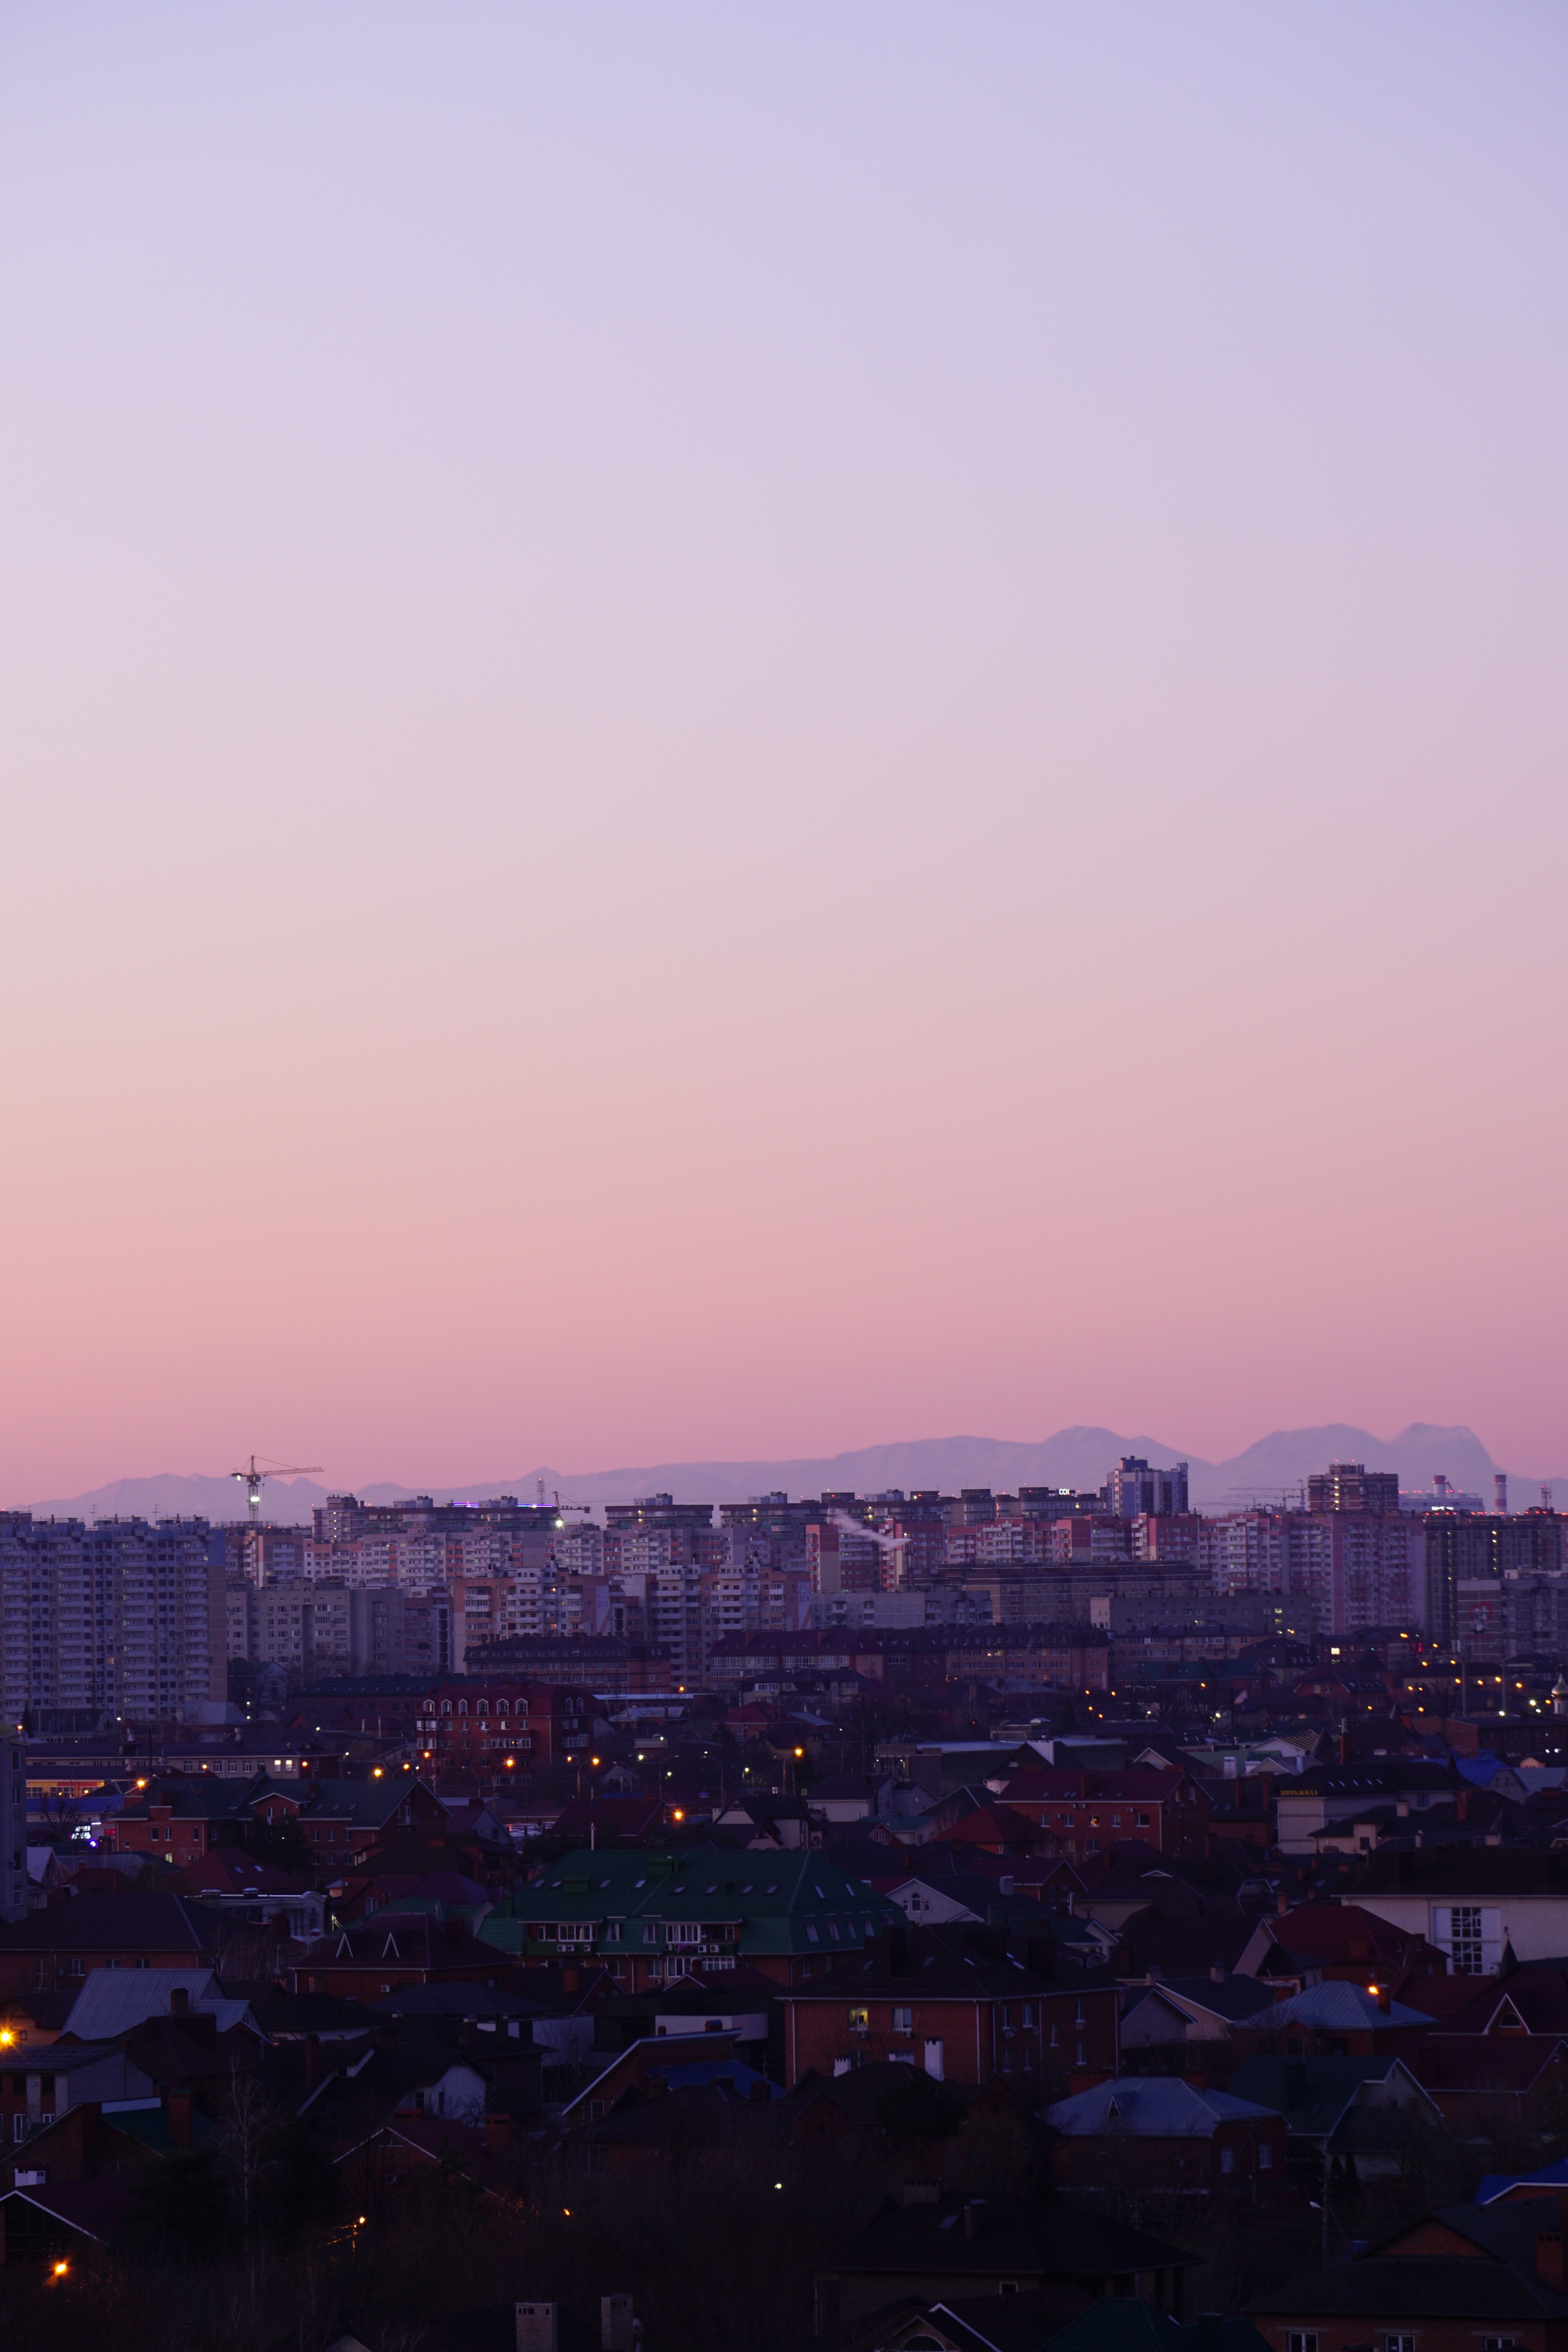 The 88th Dawn of the Year - Longpost, The sun, The mountains, Fisht, moon, Краснодарский Край, Krasnodar, Sunrises and sunsets, dawn, The photo, My